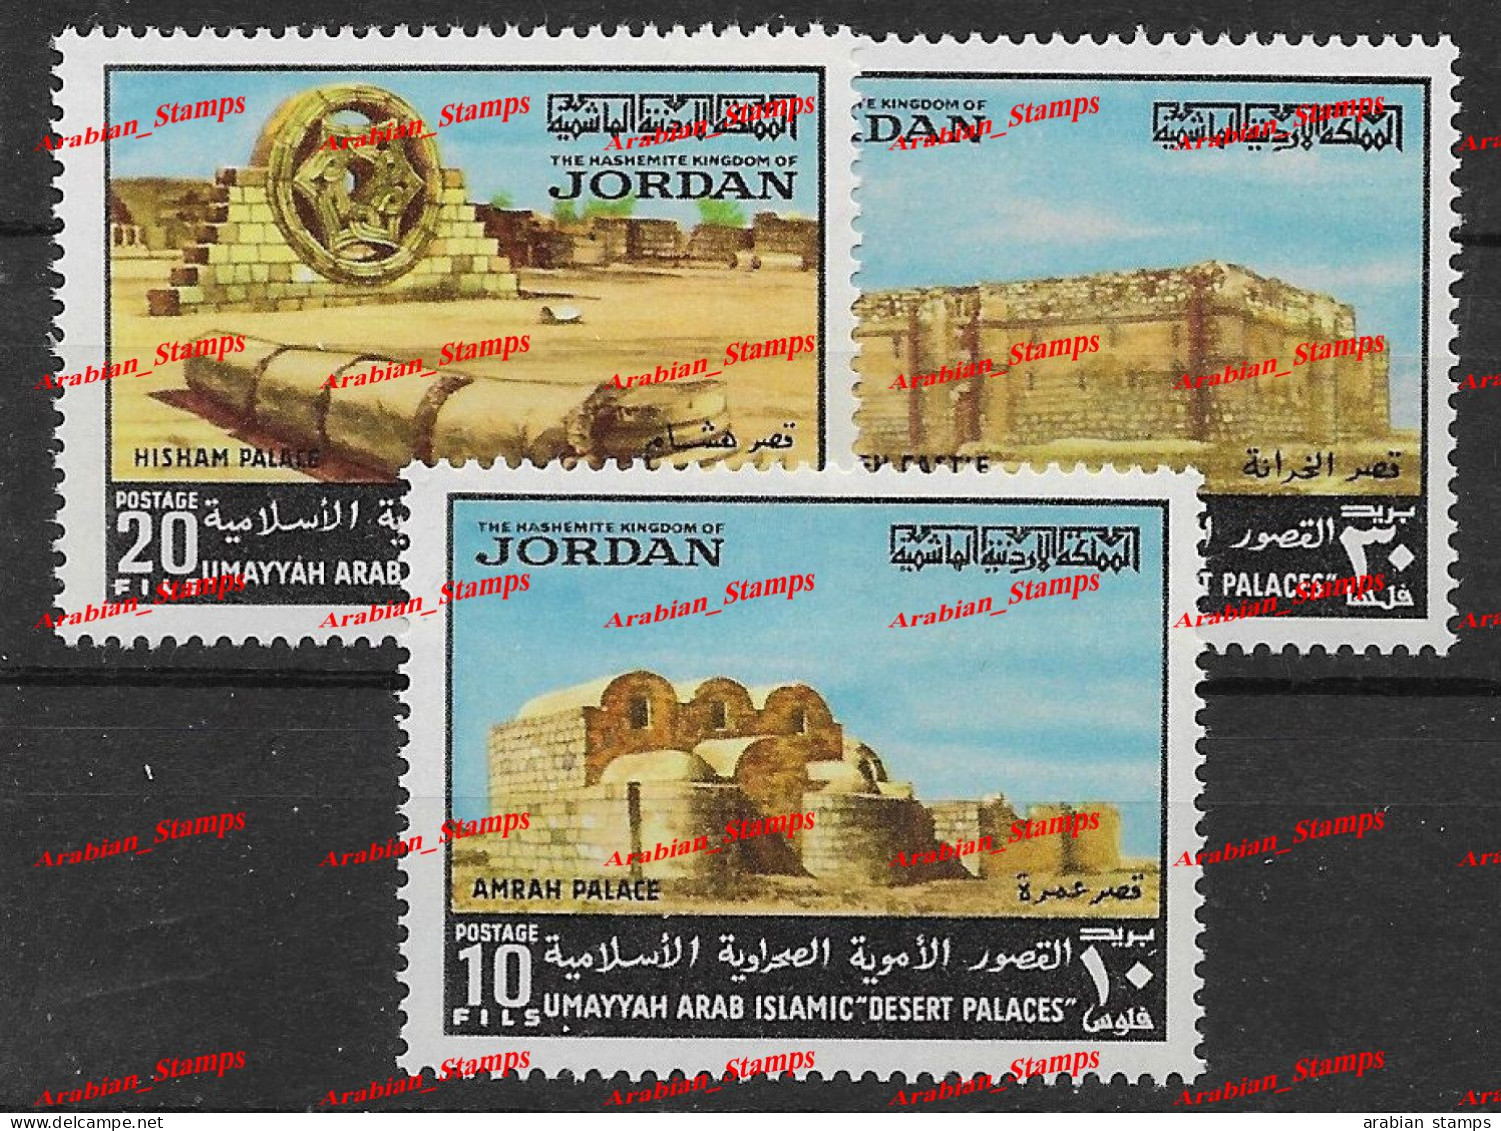 HASHIMATE KINGDOM OF JORDAN JORDANIE 1974 MNH DESERT RUINS DESERT PALACES MONUMENTS AMRA PALACE KHARRANEH CASTLE - Jordania